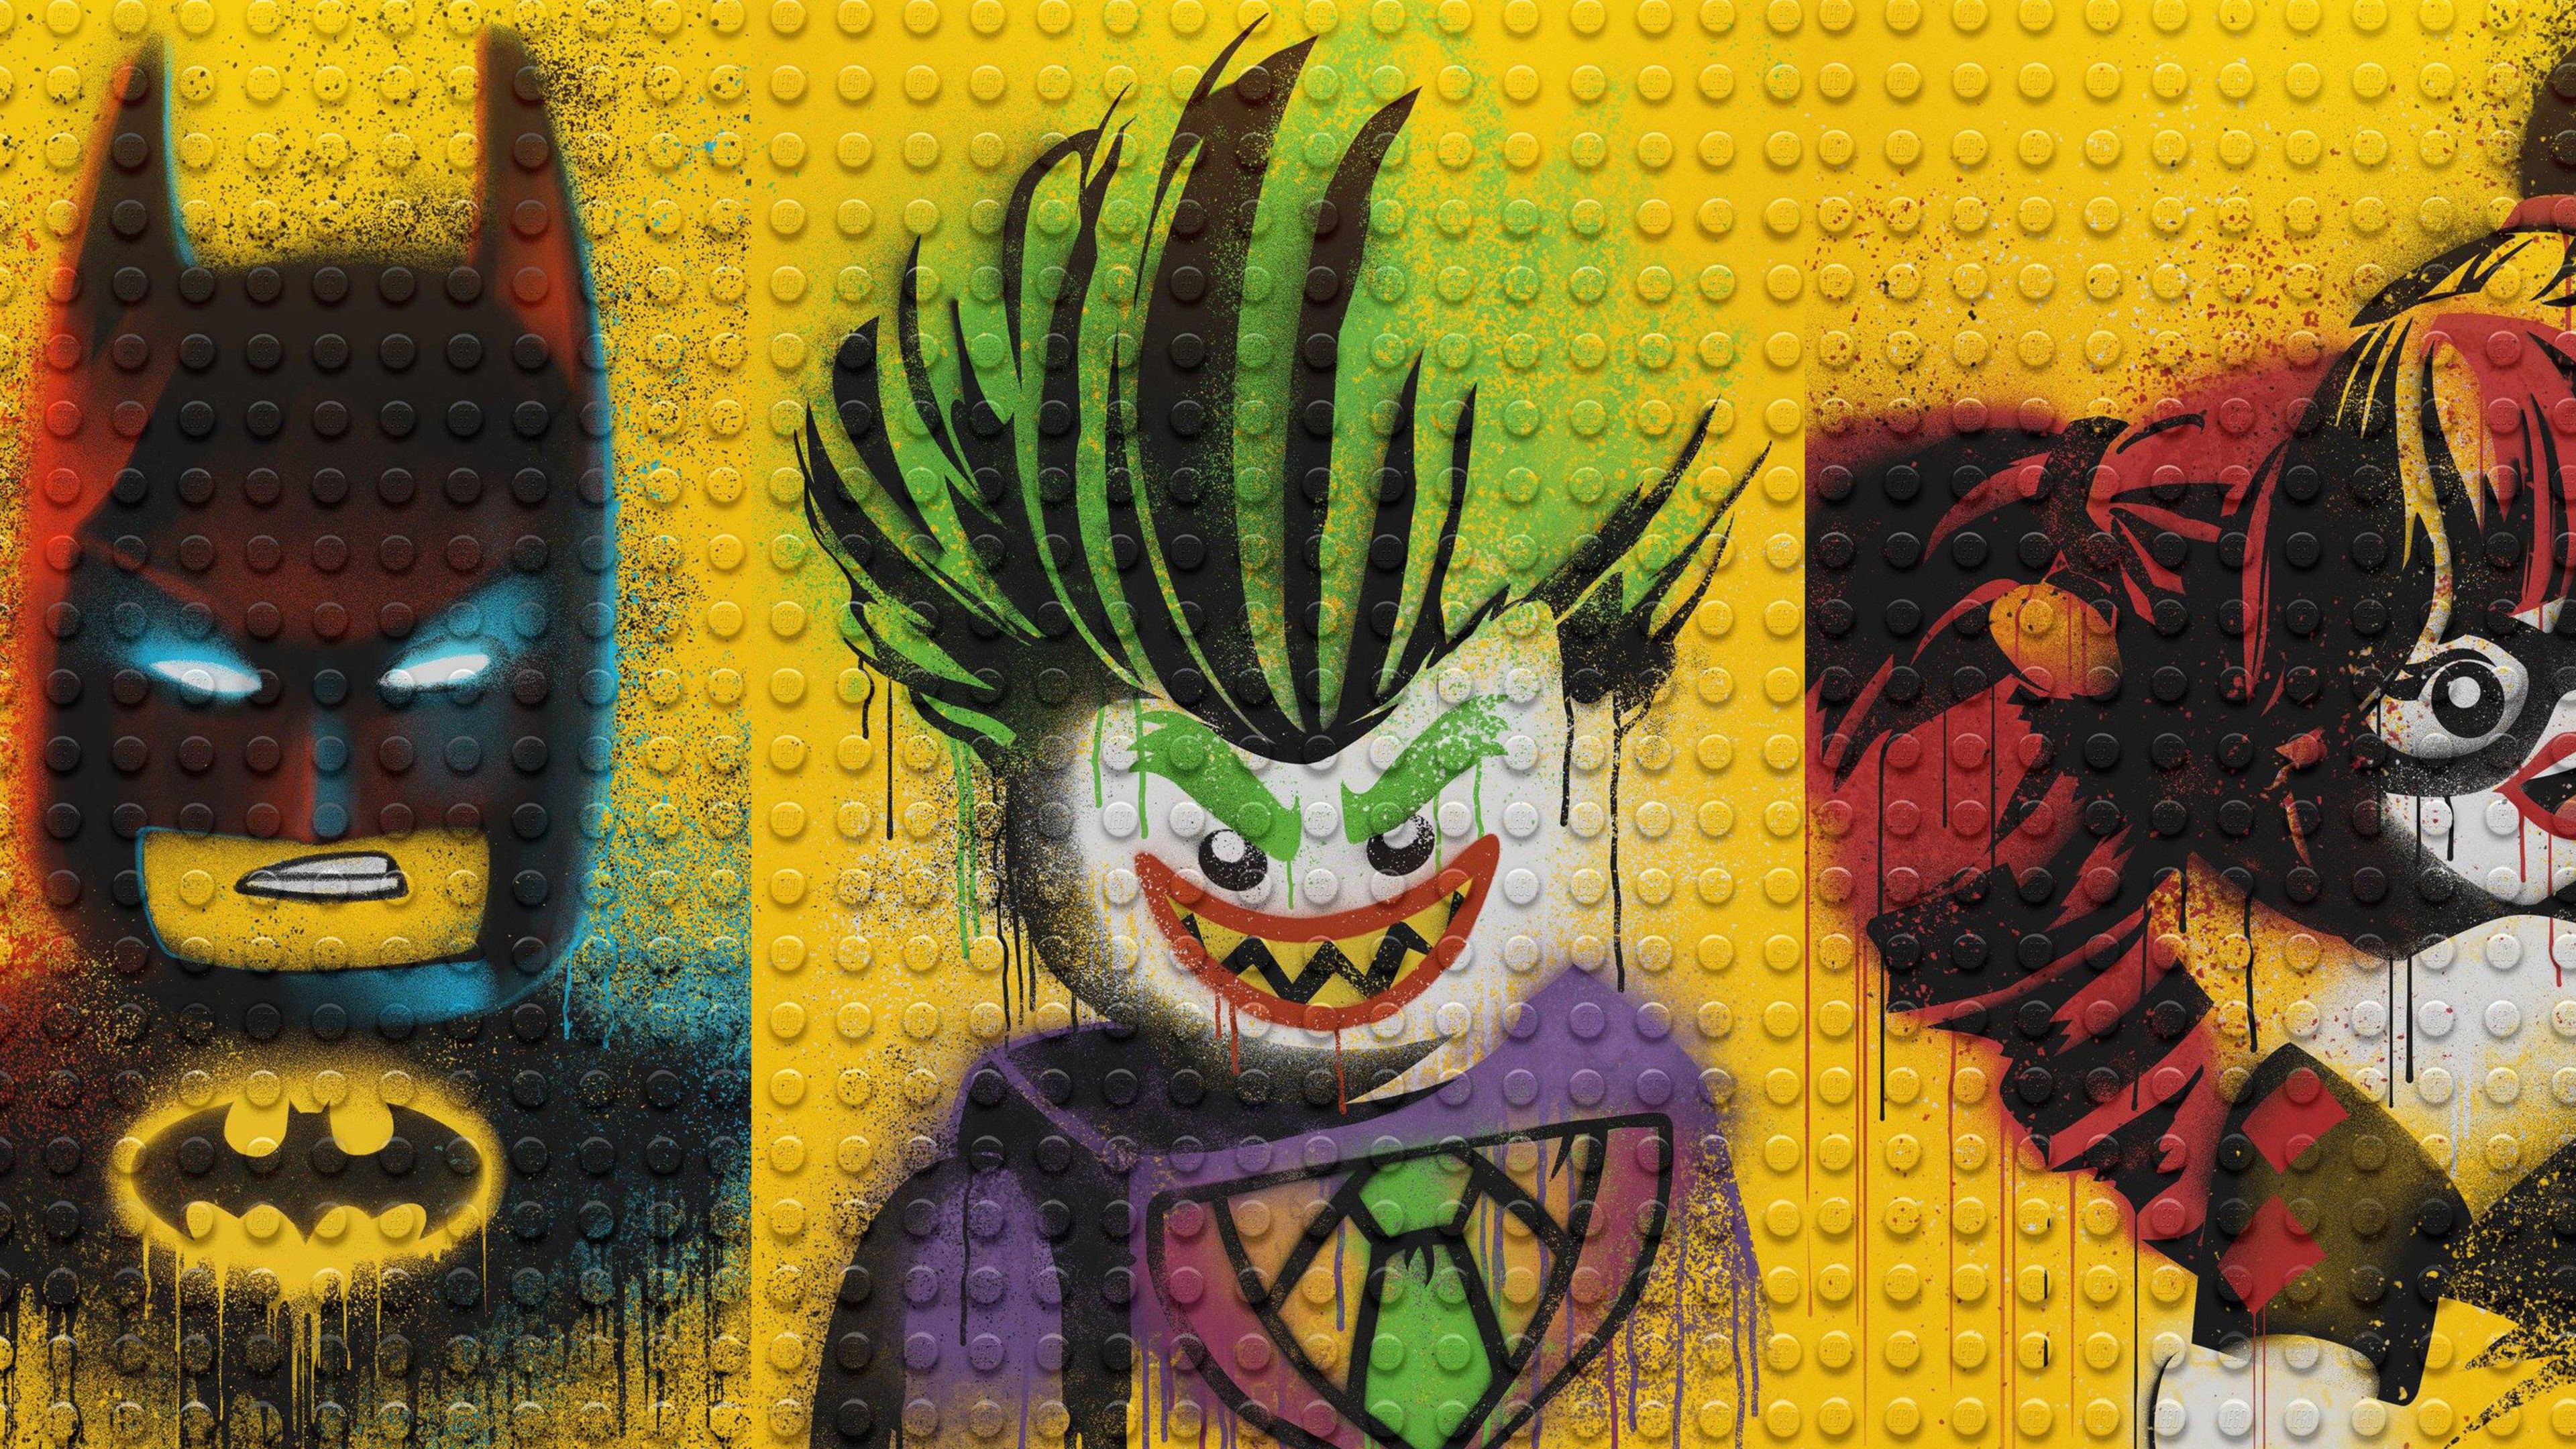 Wallpaper 4k The Lego Batman Harley Quinn And Joker 2017 movies wallpaper, animated movies wallpaper, batman wallpaper, harley quinn wallpaper, joker wallpaper, movies wallpaper, the lego batman movie wallpaper